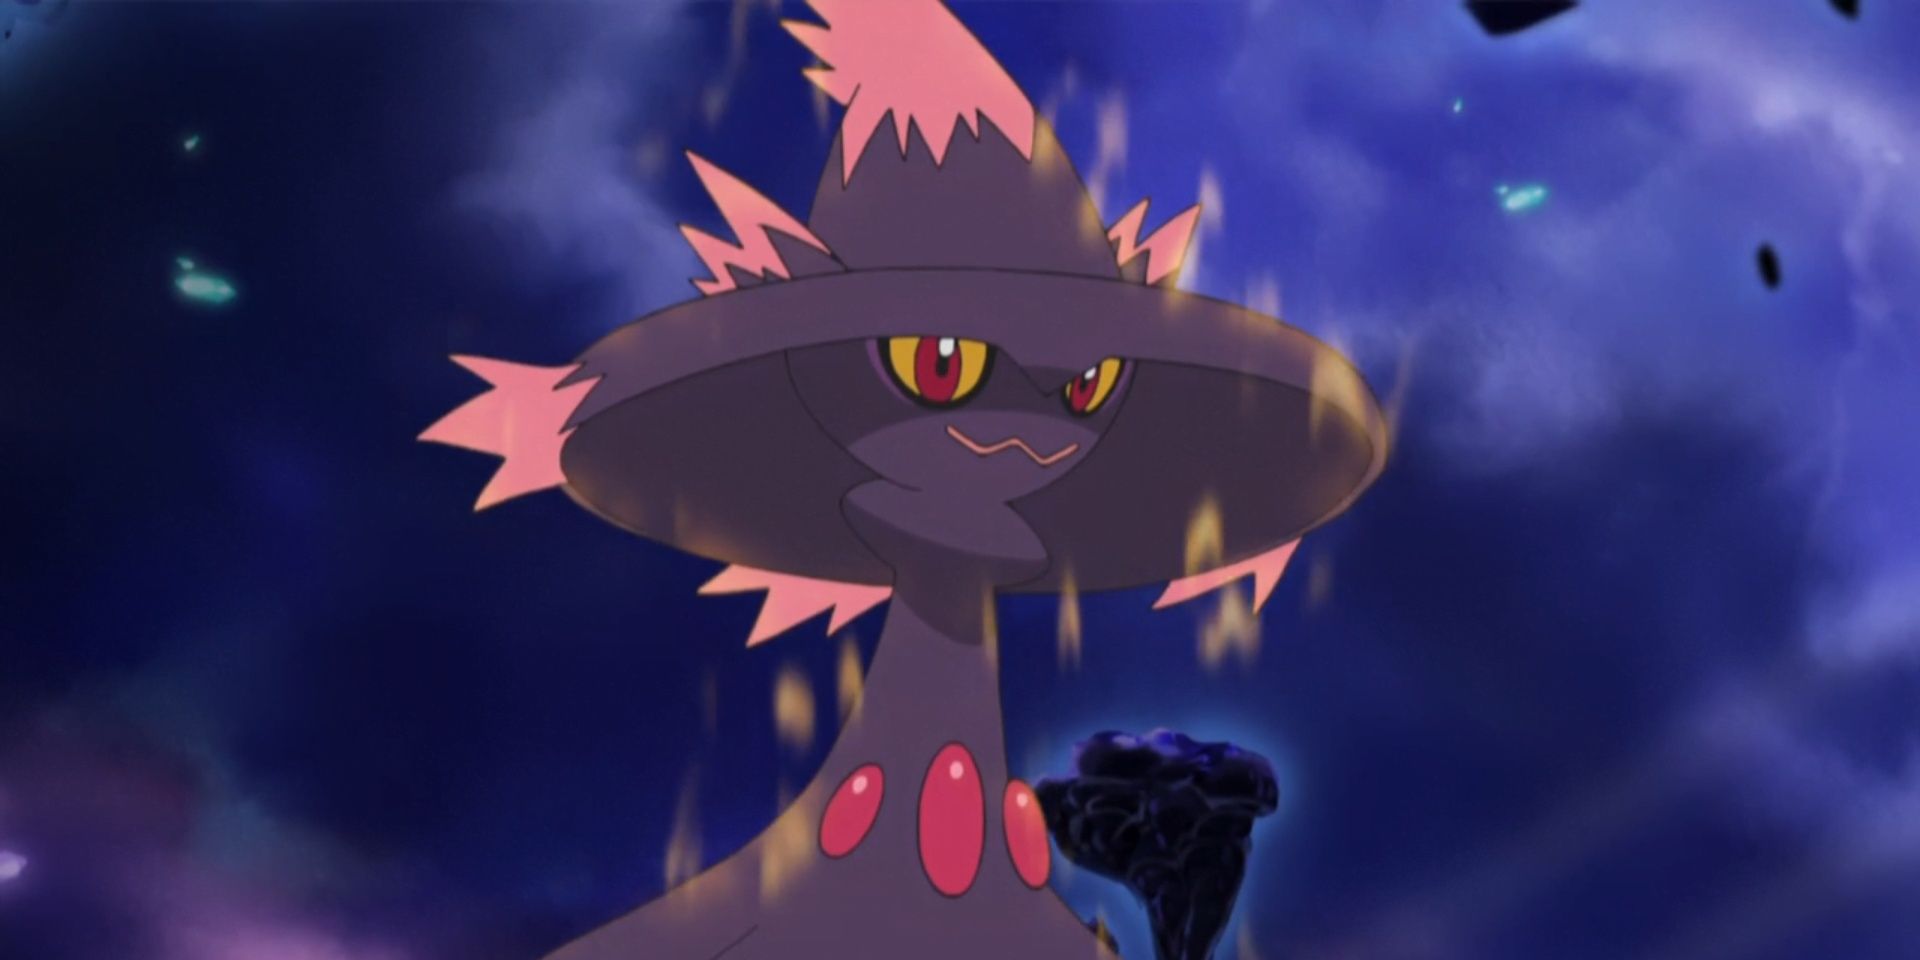 Mismagius floating against a dark and cloudy sky in the Pokémon anime